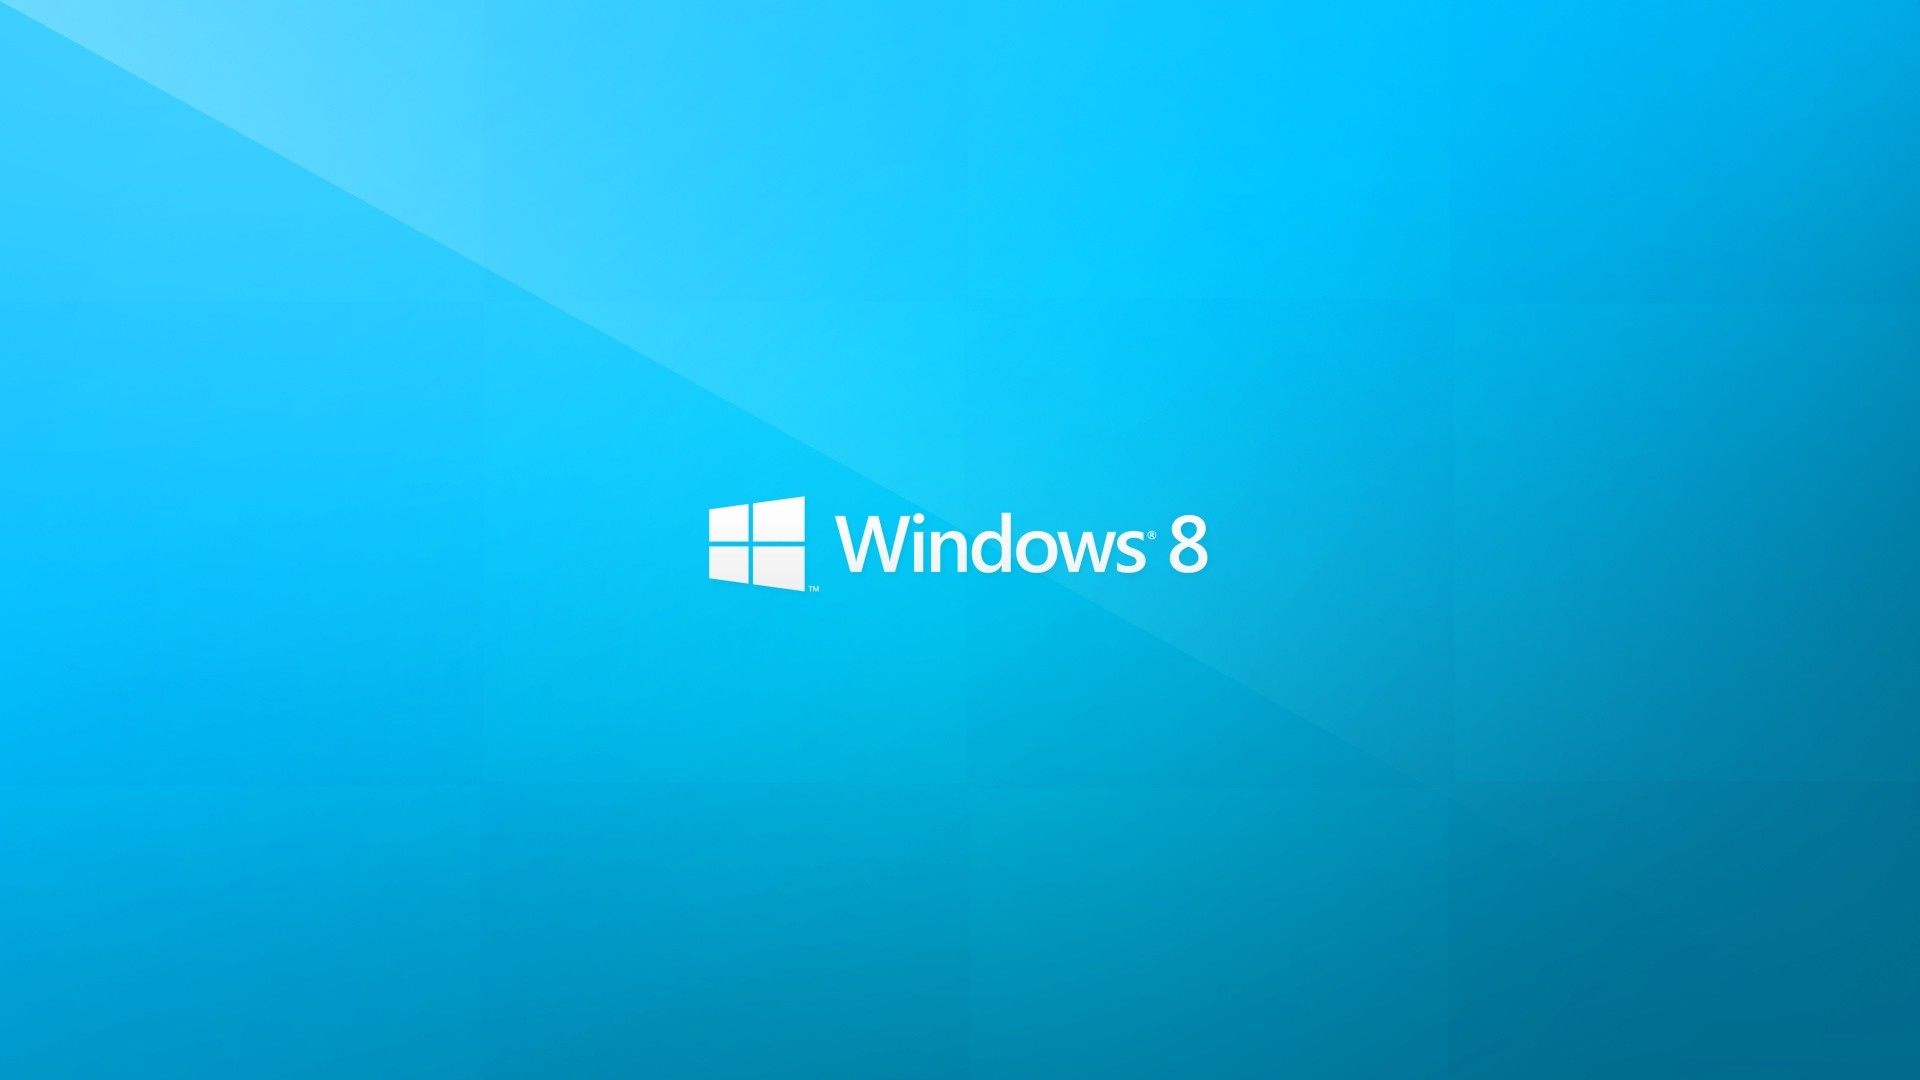 General 1920x1080 Windows 8 minimalism logo gradient cyan background Microsoft Windows operating system